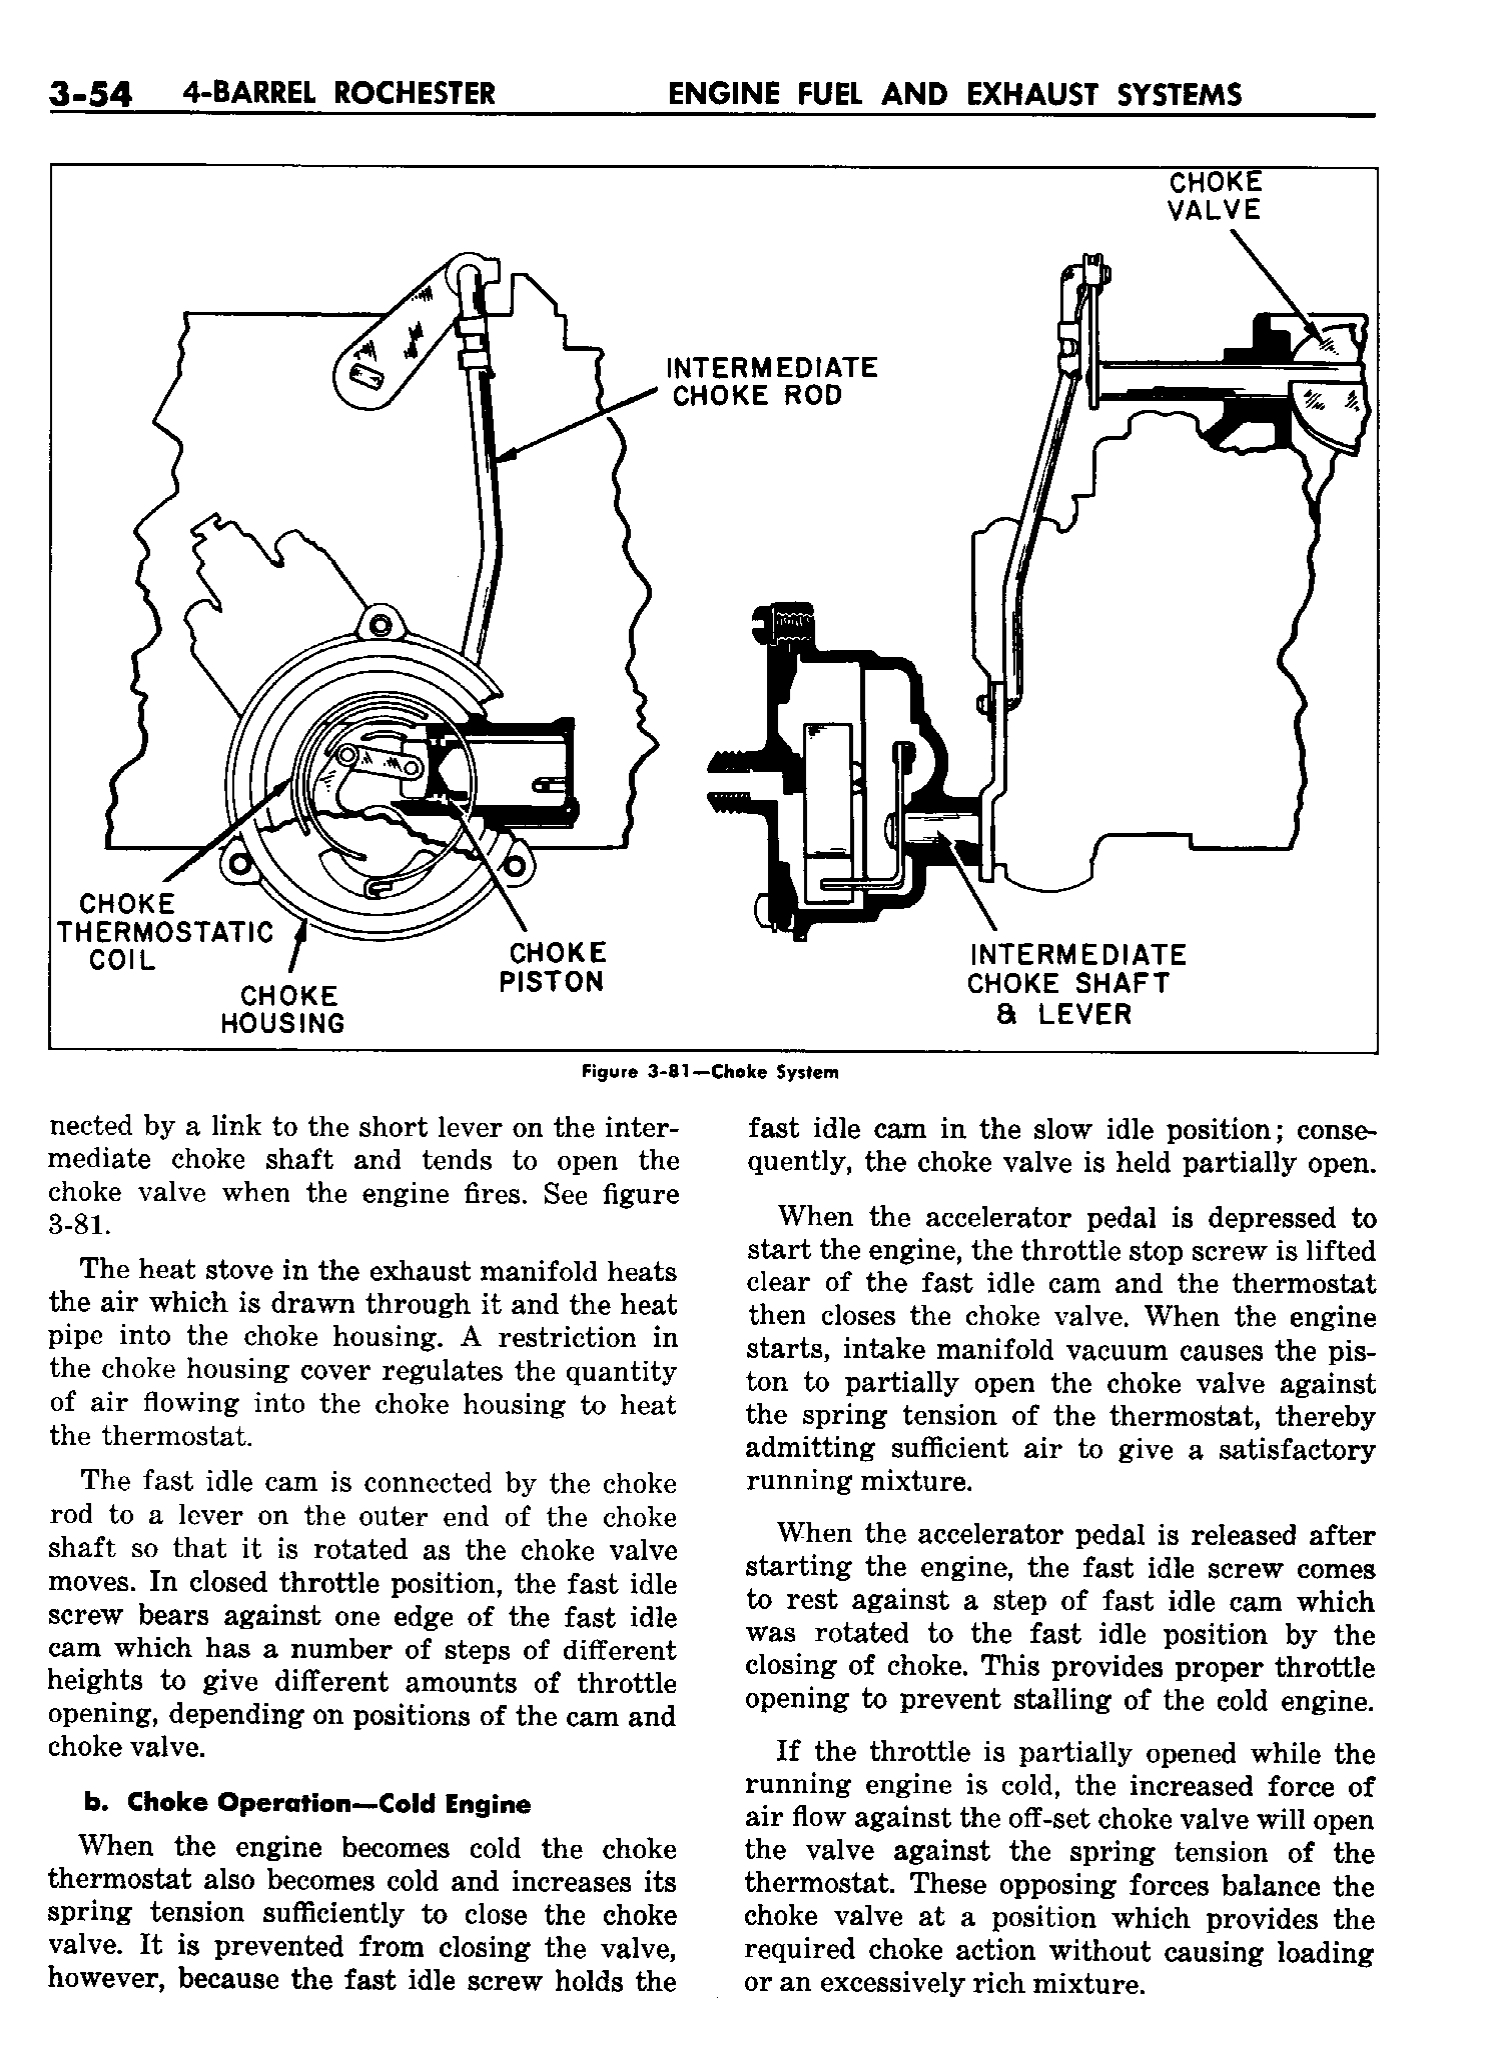 n_04 1958 Buick Shop Manual - Engine Fuel & Exhaust_54.jpg